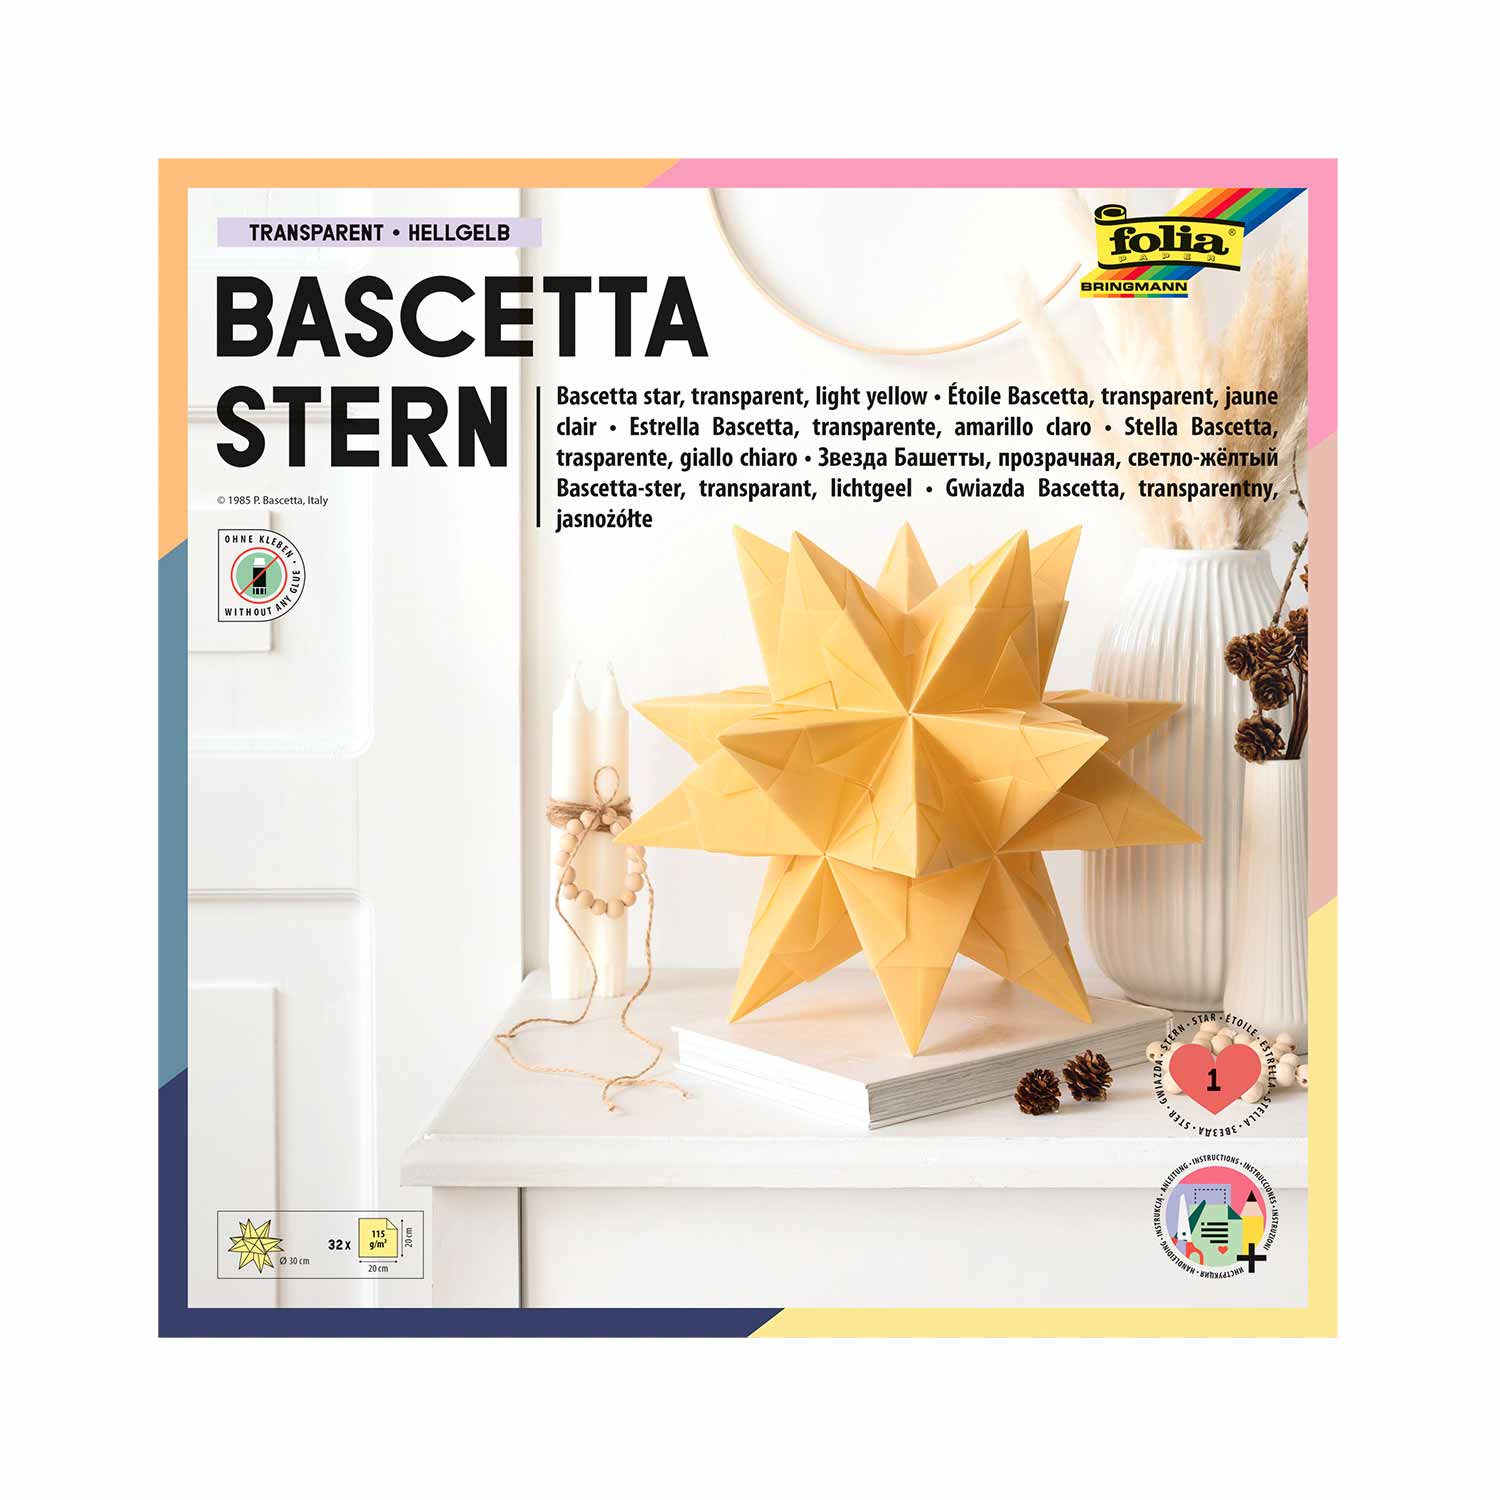 Bascetta-Stern Bastelset 32 Blatt 20 x 20 cm Transparentpapier hellgelb 